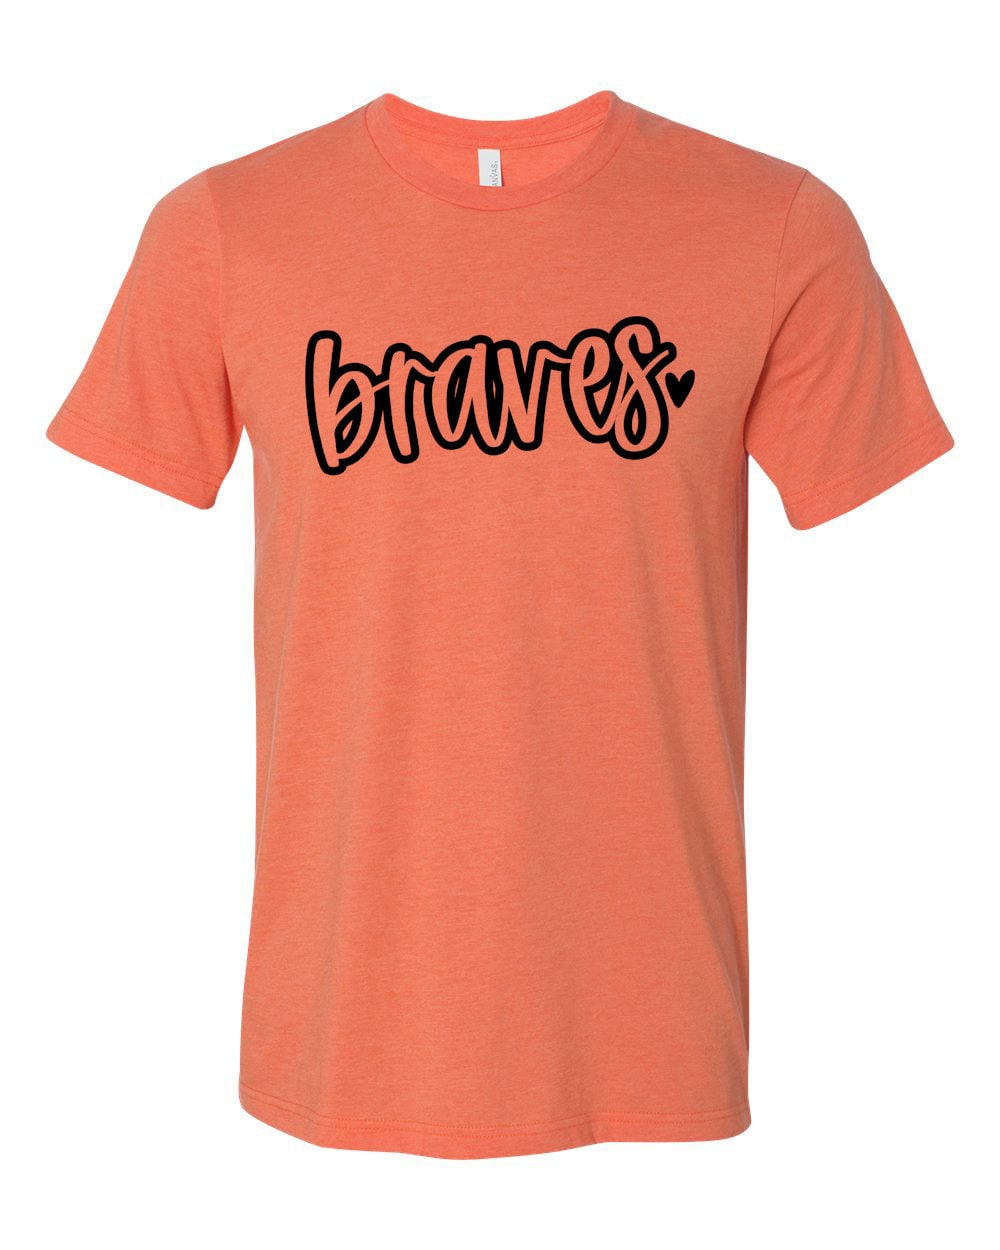 Atlanta Braves Mens T-Shirt, Mens Braves Shirts, Braves Baseball Shirts,  Tees